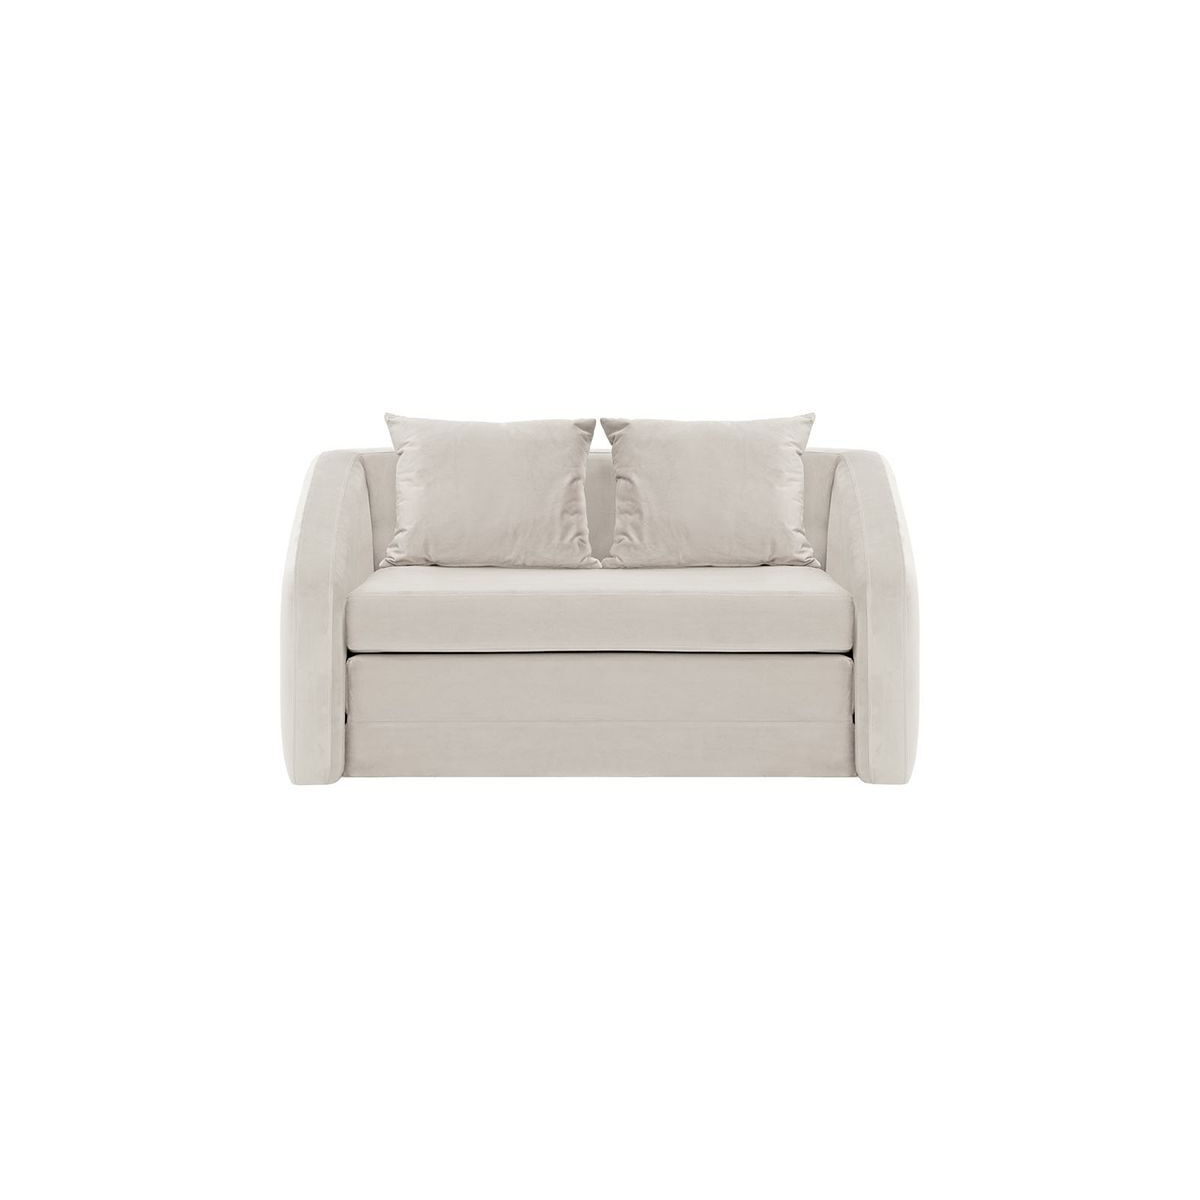 Alma 2 Seater Sofa Bed, light beige - image 1